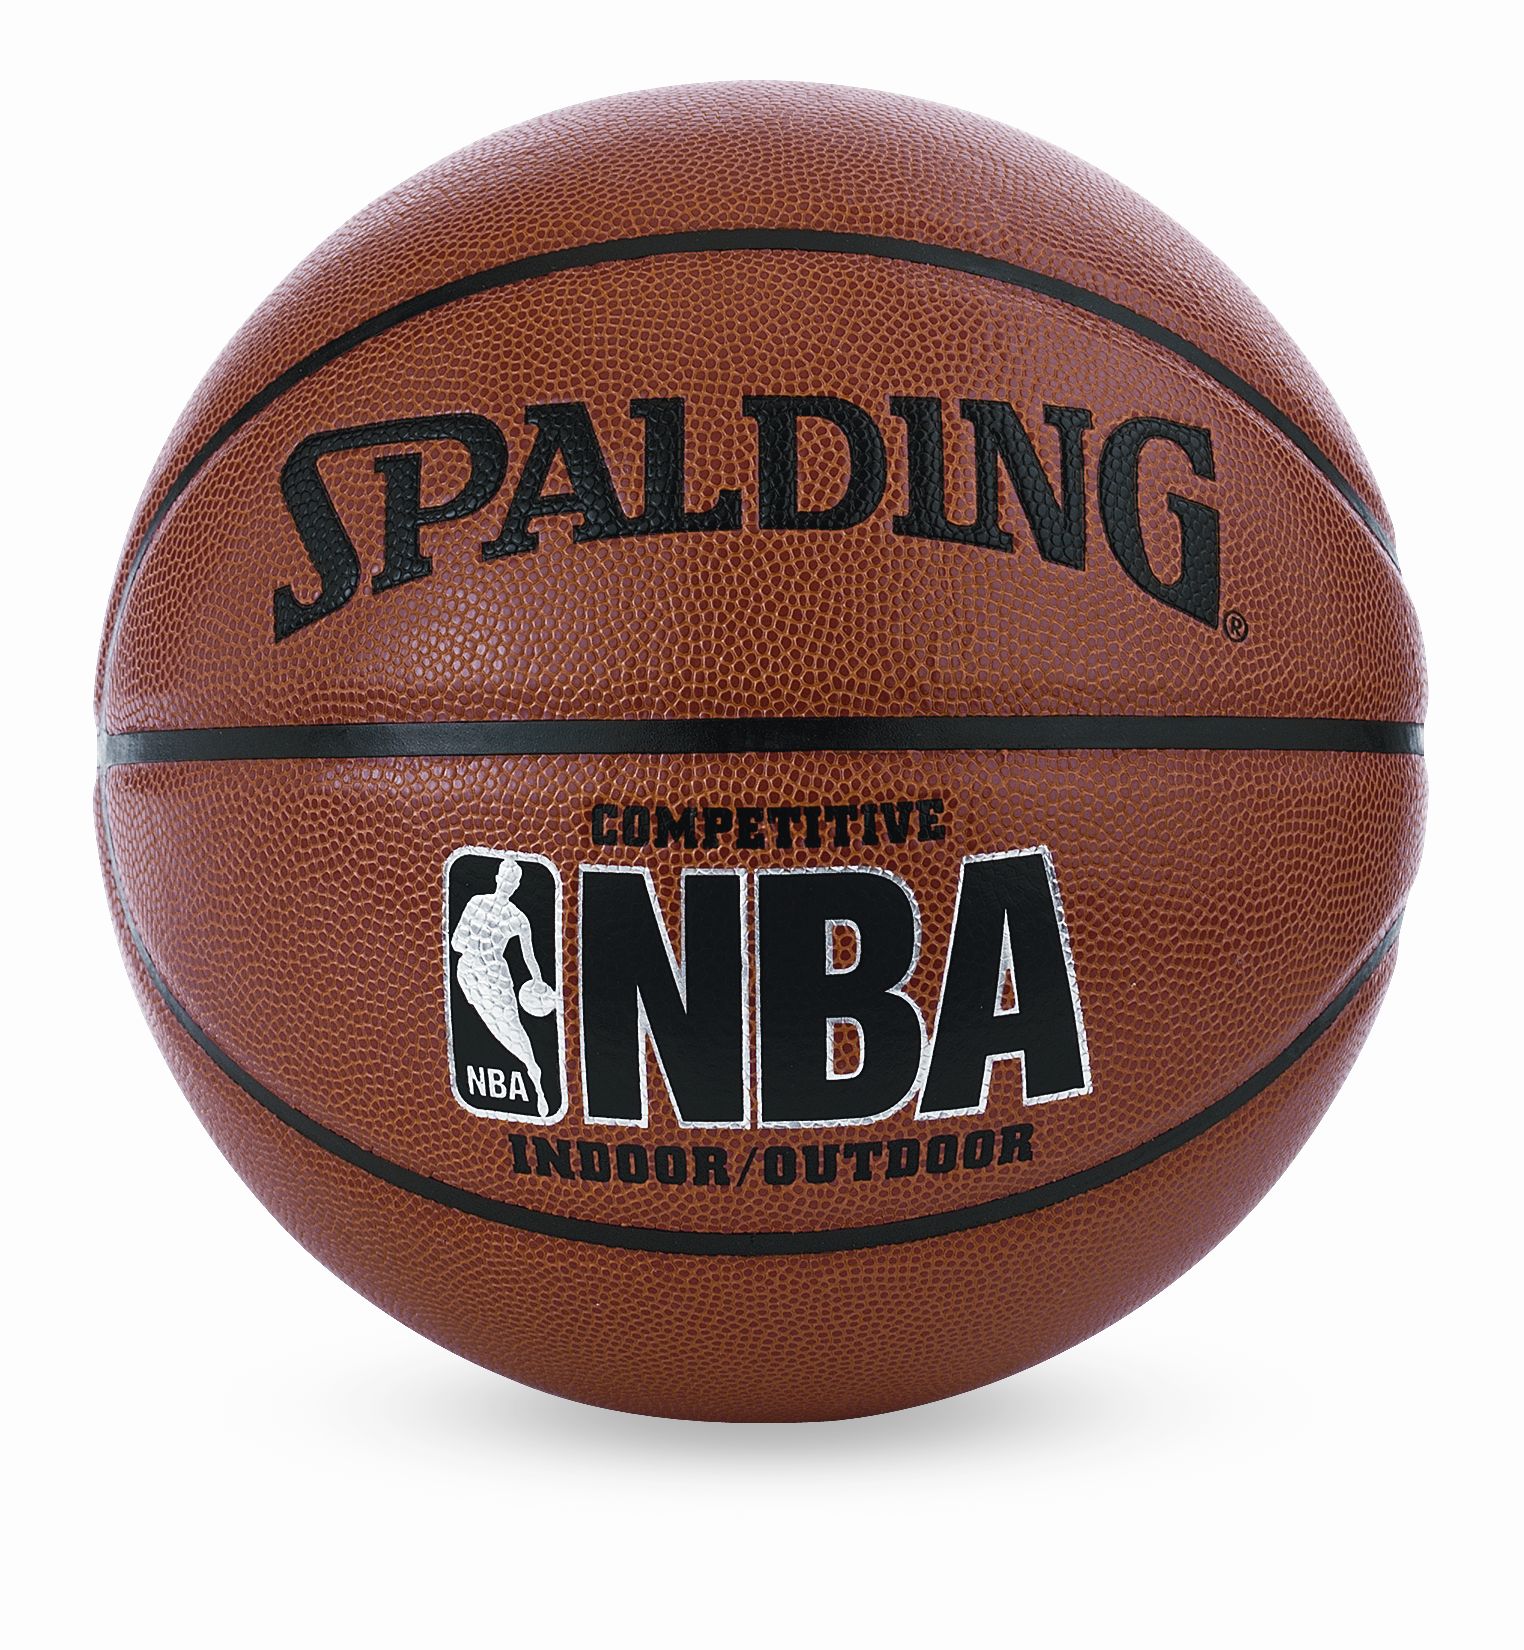 Spalding NBA Tack Soft Indoor/Outdoor Composite Basketball (29.5)